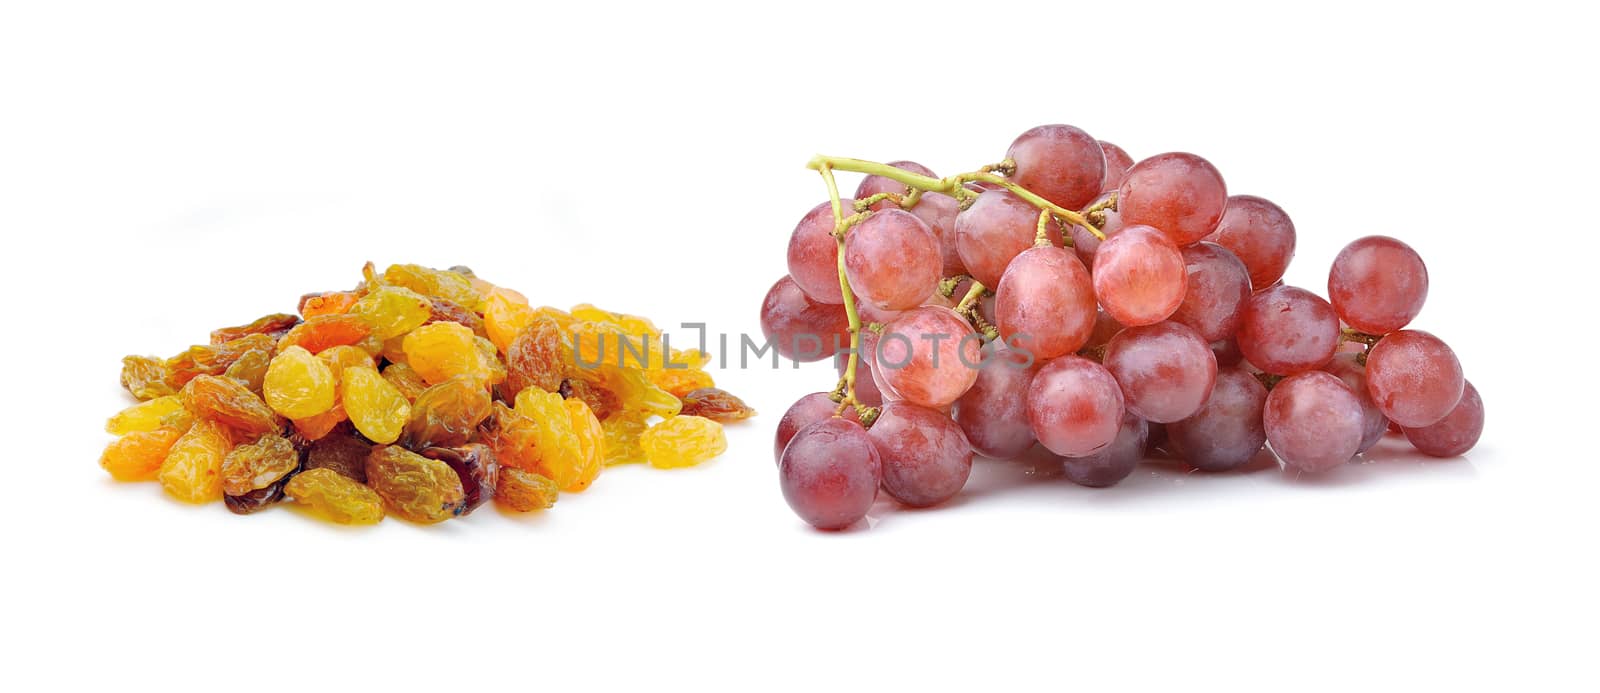 Grapes with raisins